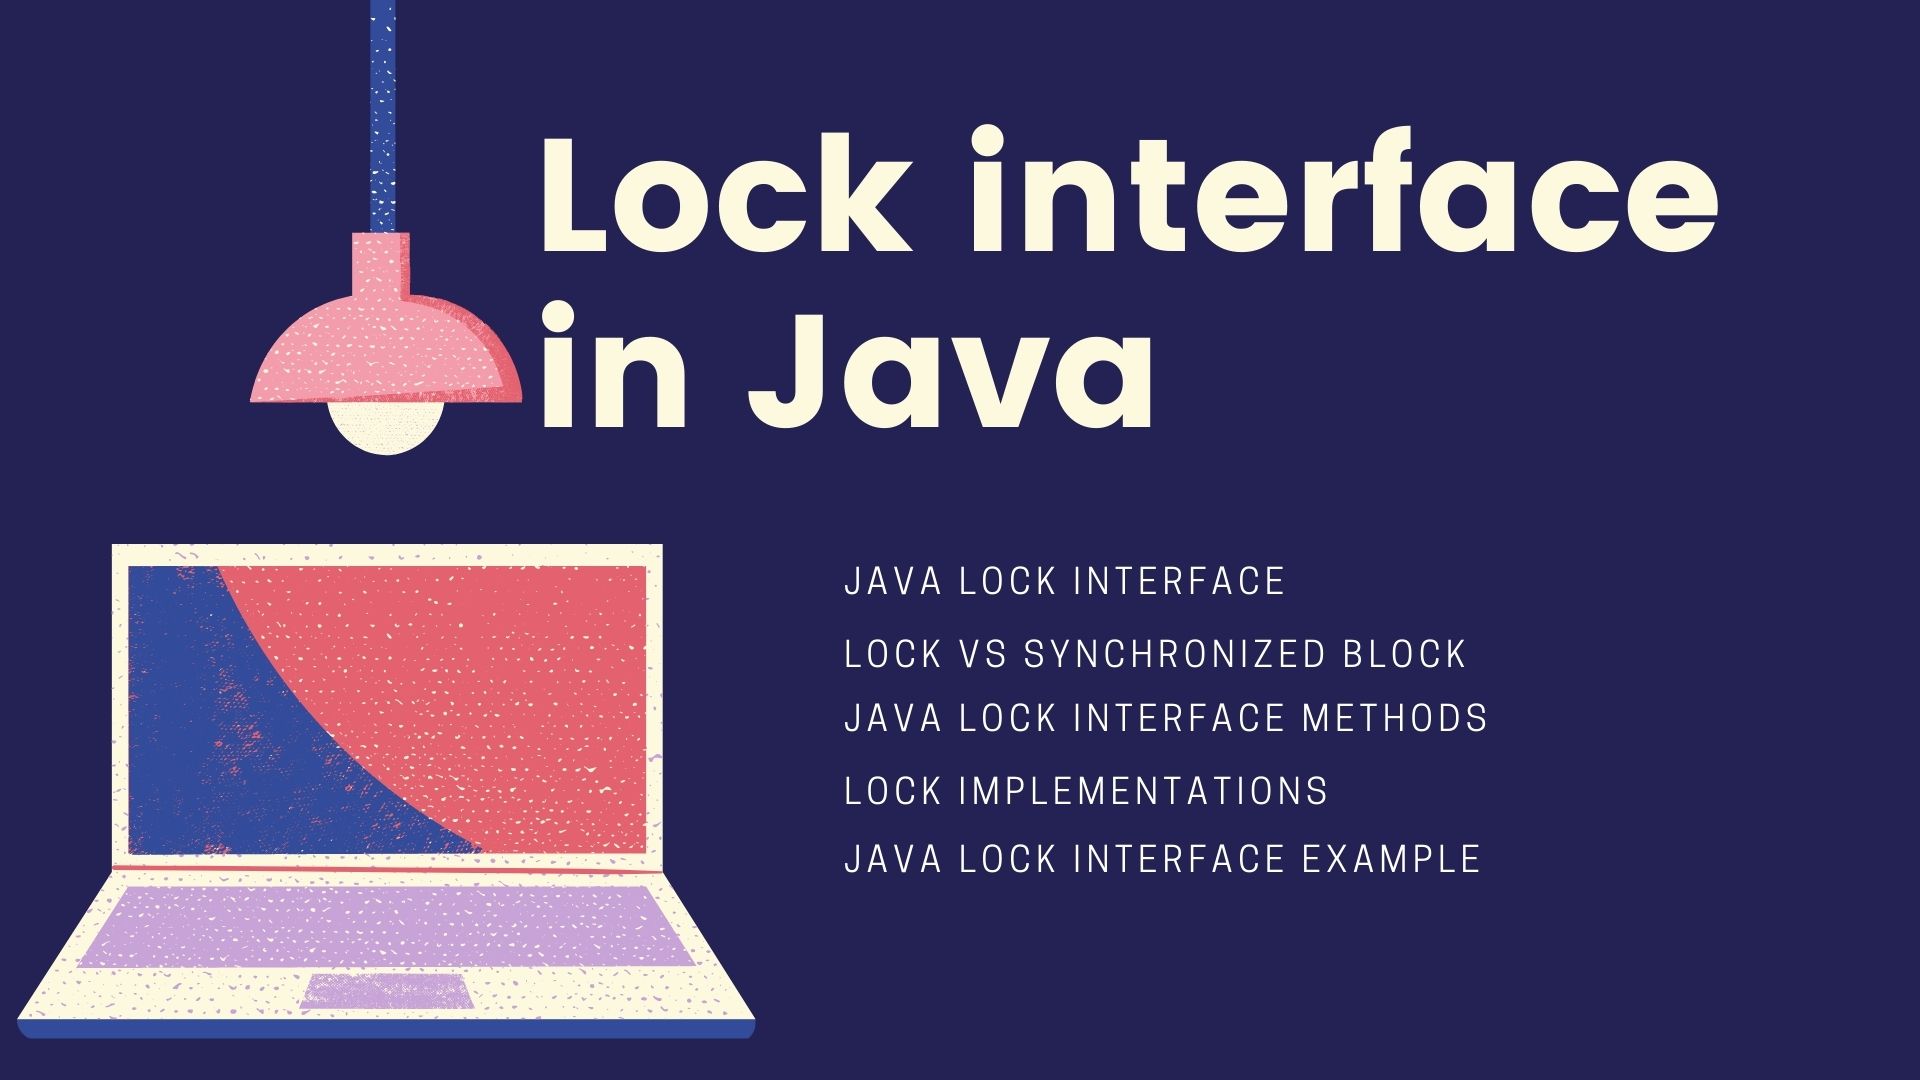 Lock interface in Java